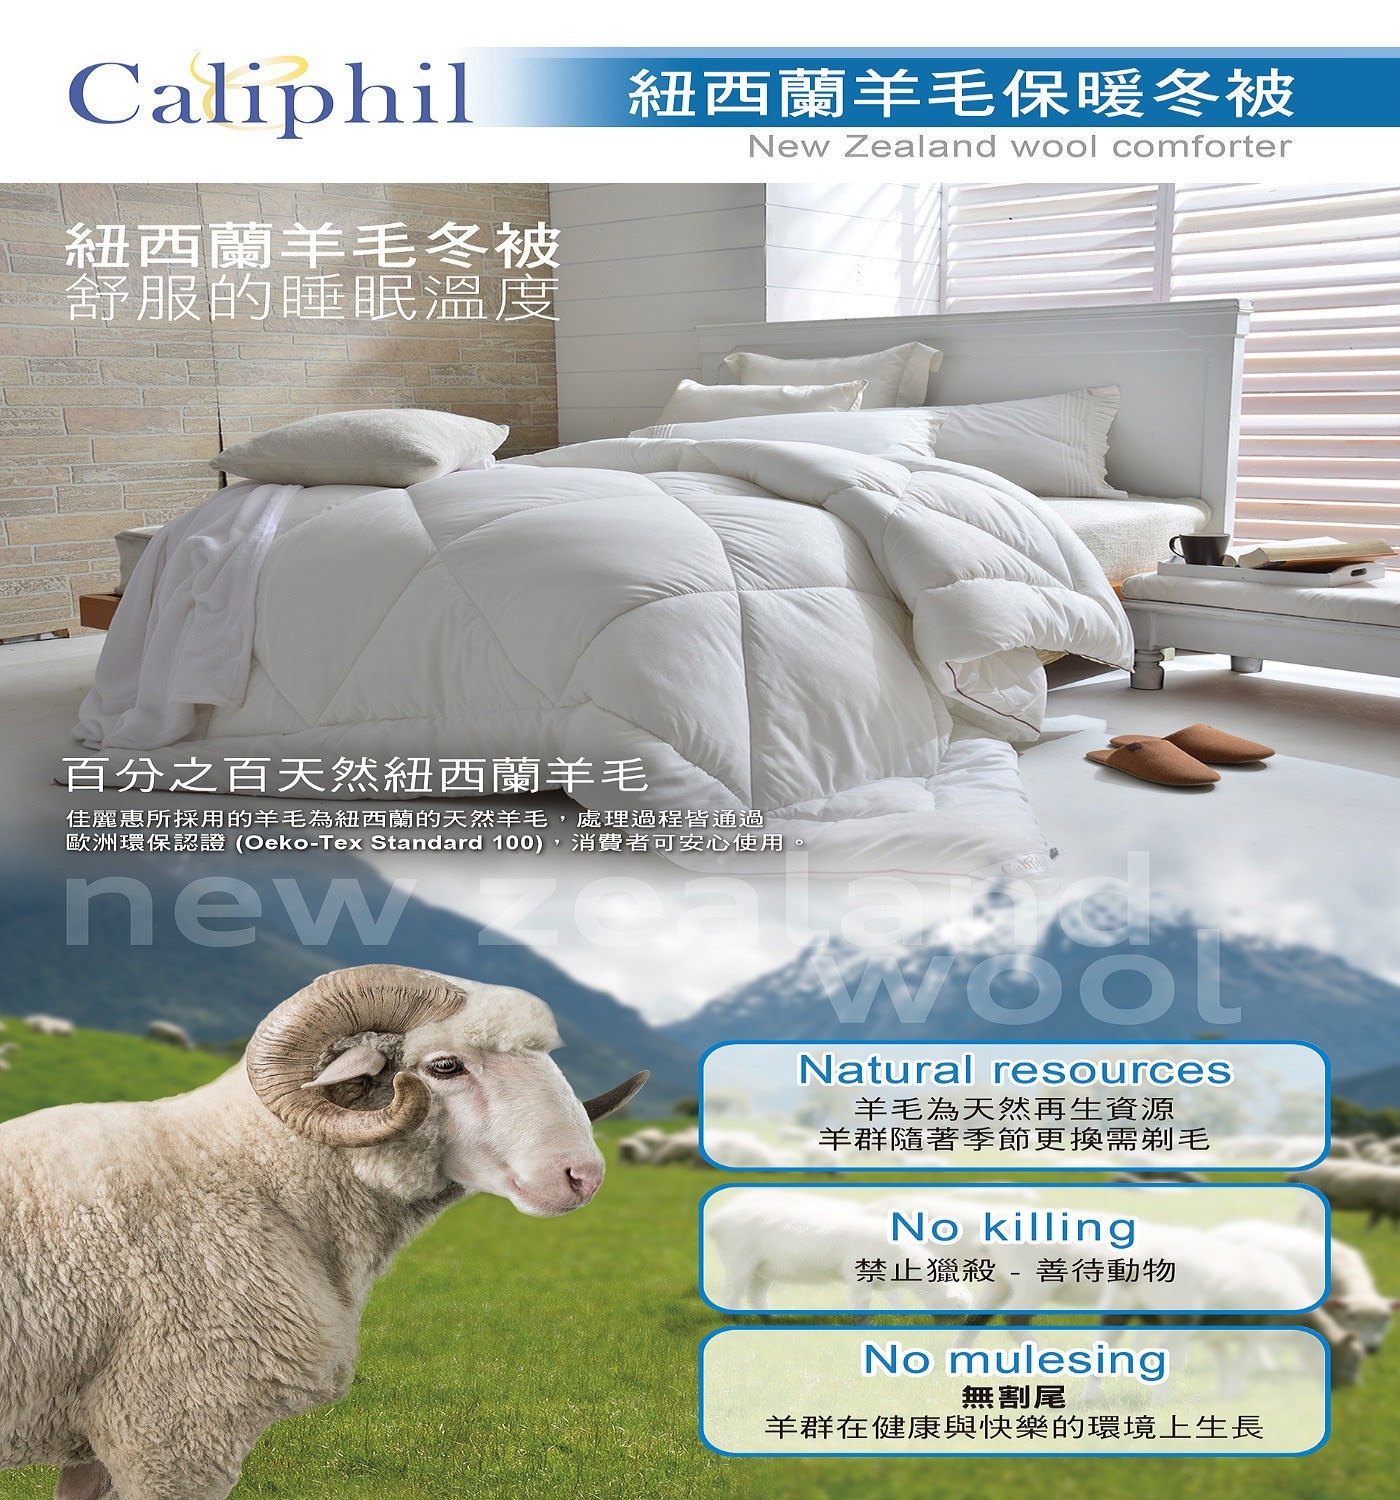 Caliphil 雙人紐西蘭羊毛被 百分之百天然紐西蘭羊毛